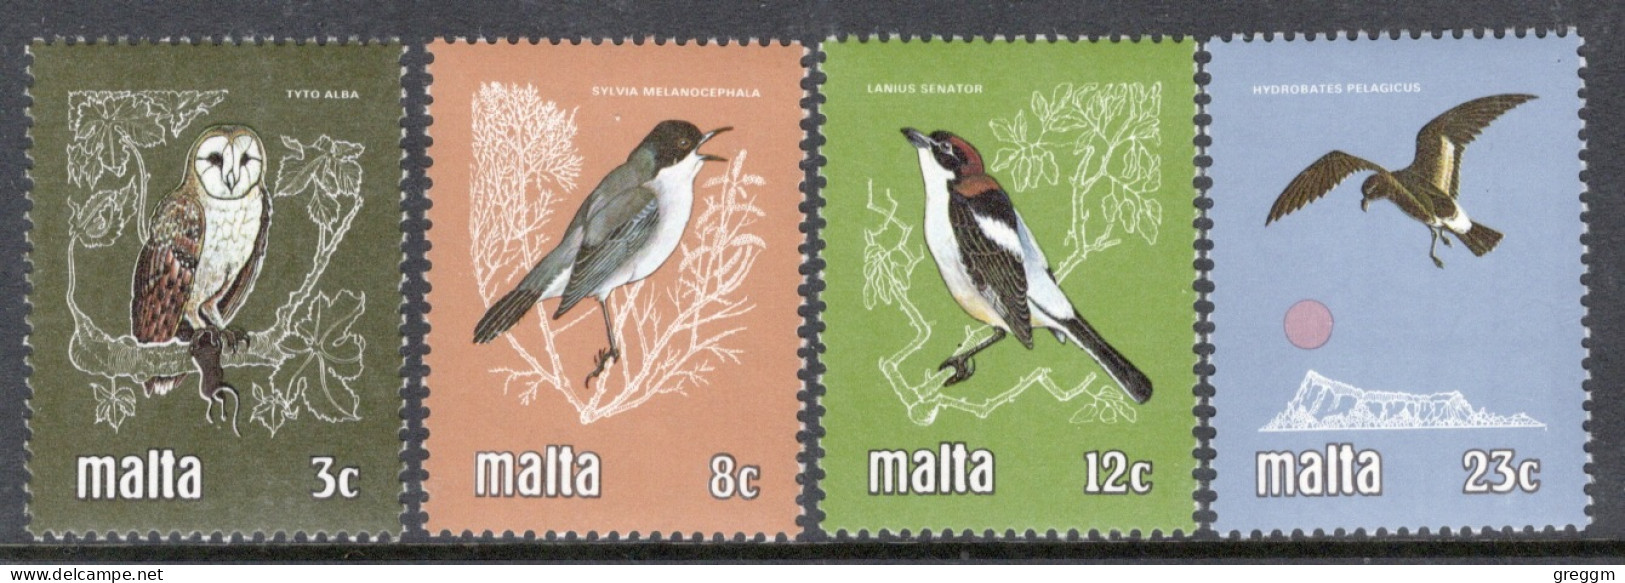 Malta 1981 Set To Celebrate Birds In Unmounted Mint - Malta